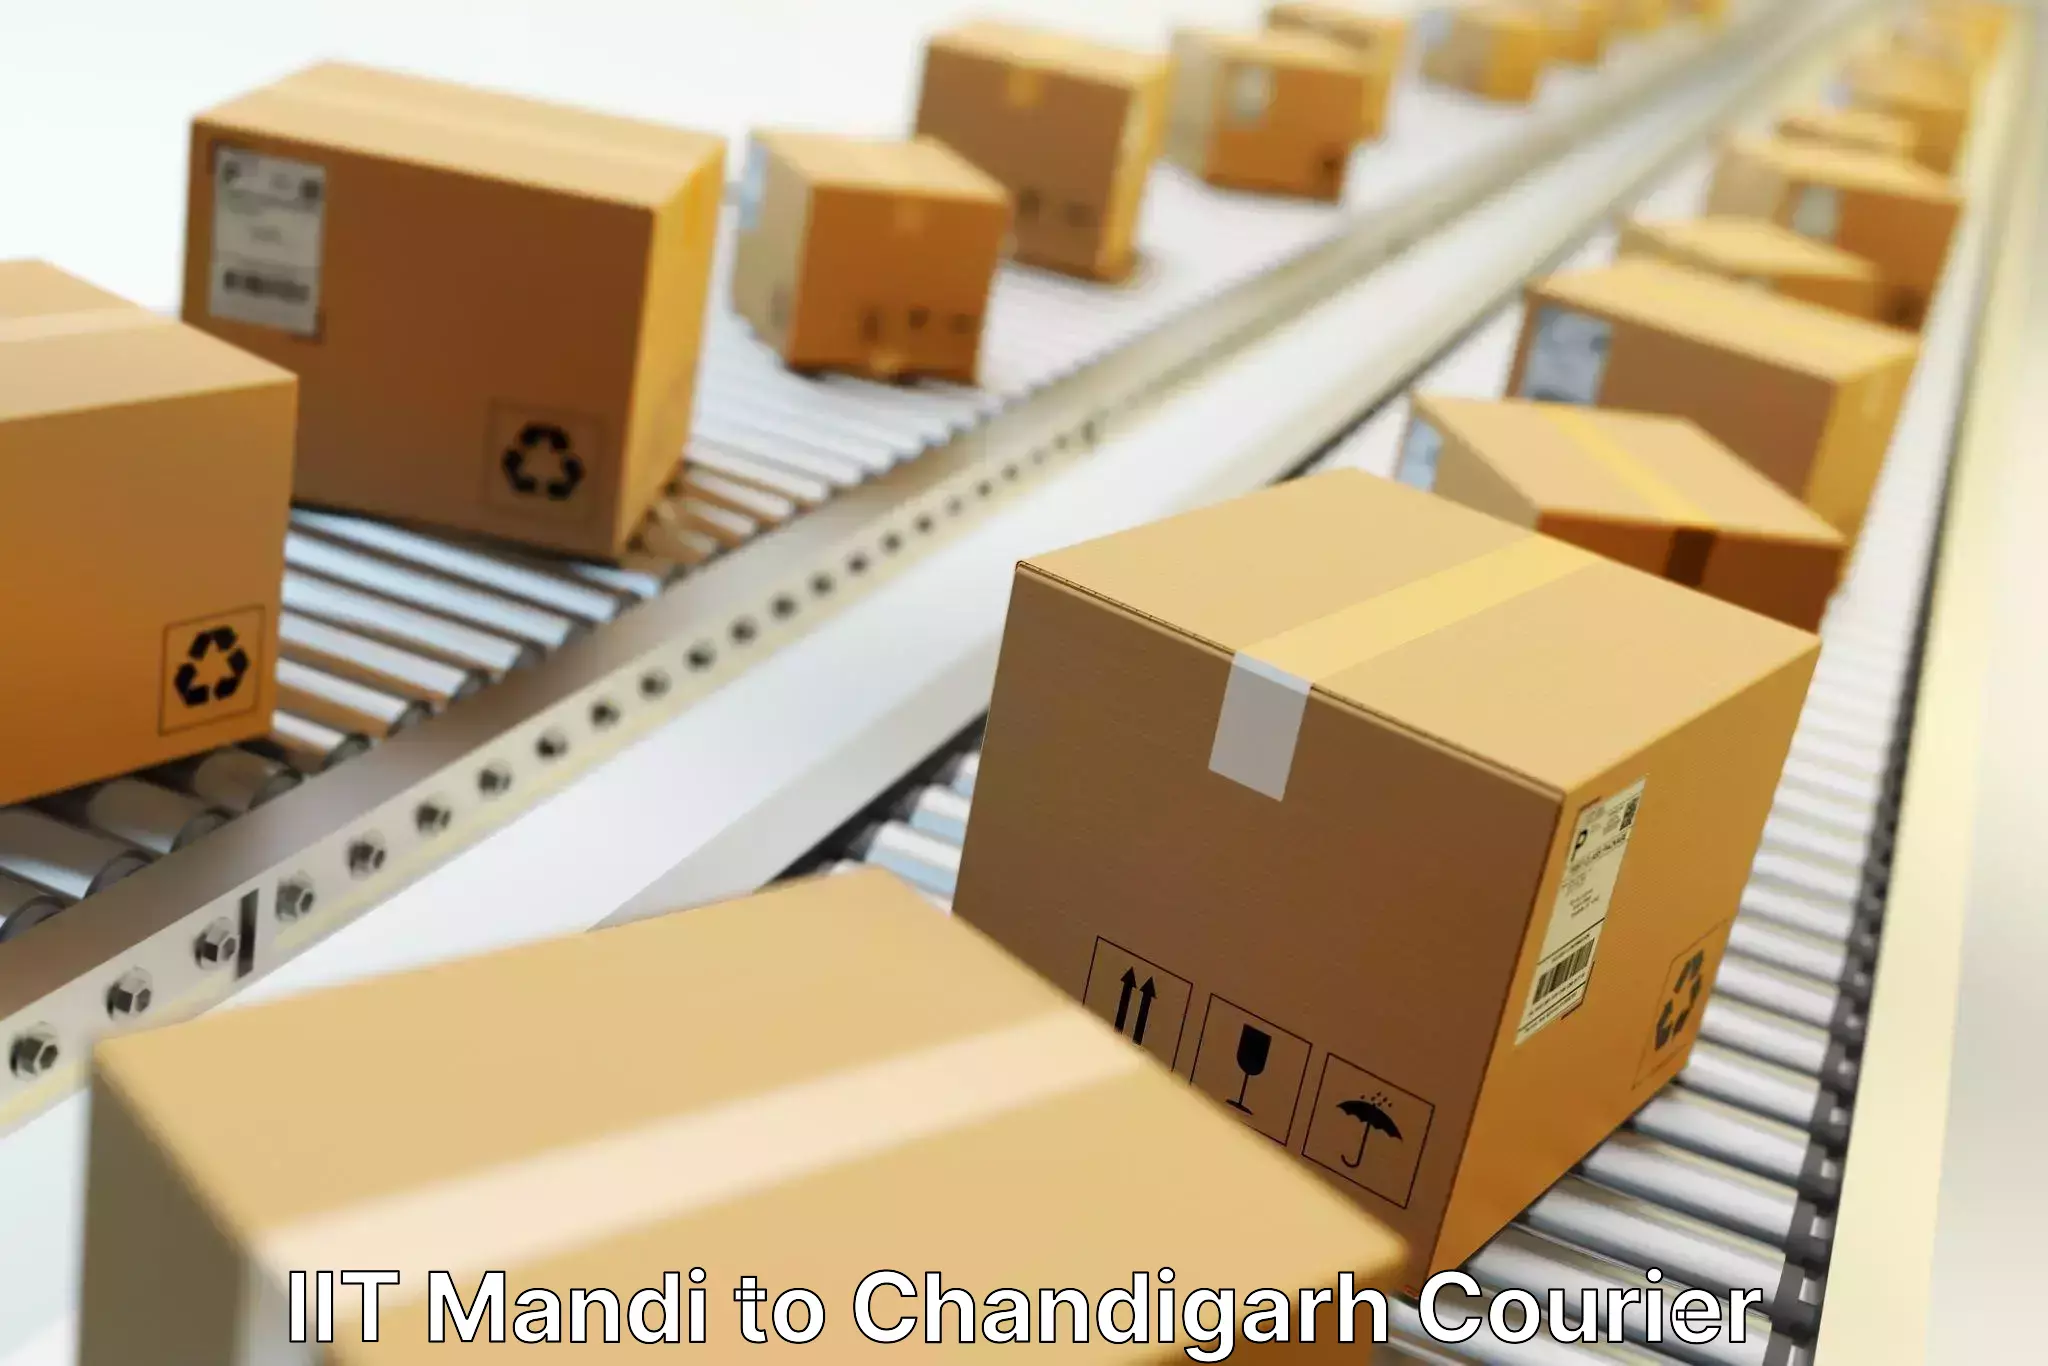 Courier service efficiency in IIT Mandi to Chandigarh